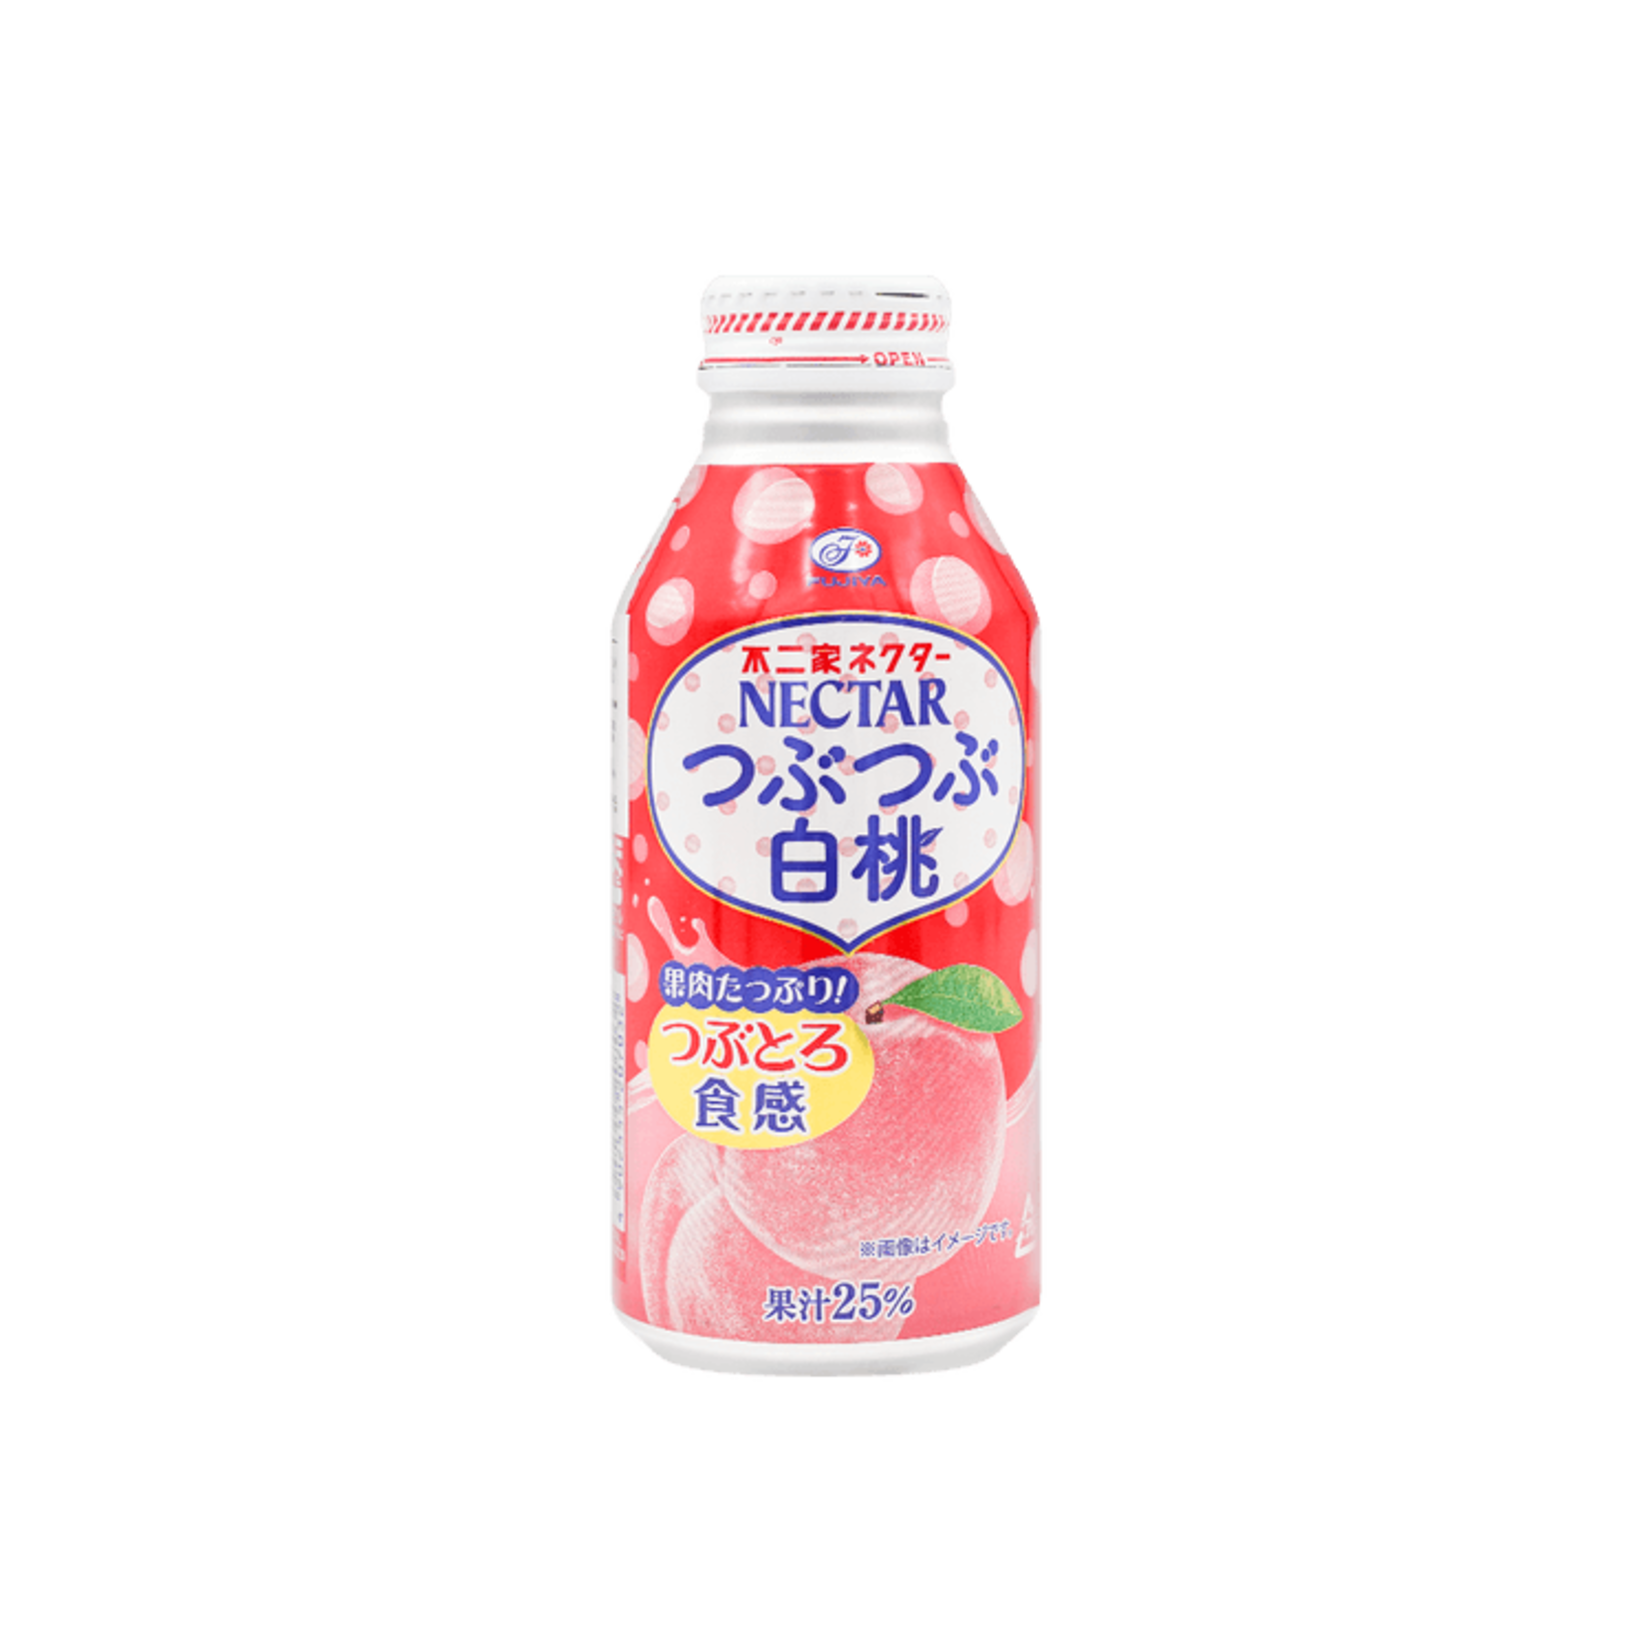 Fujiya Fujiya Nectar White Peach Juice 13.4oz Can